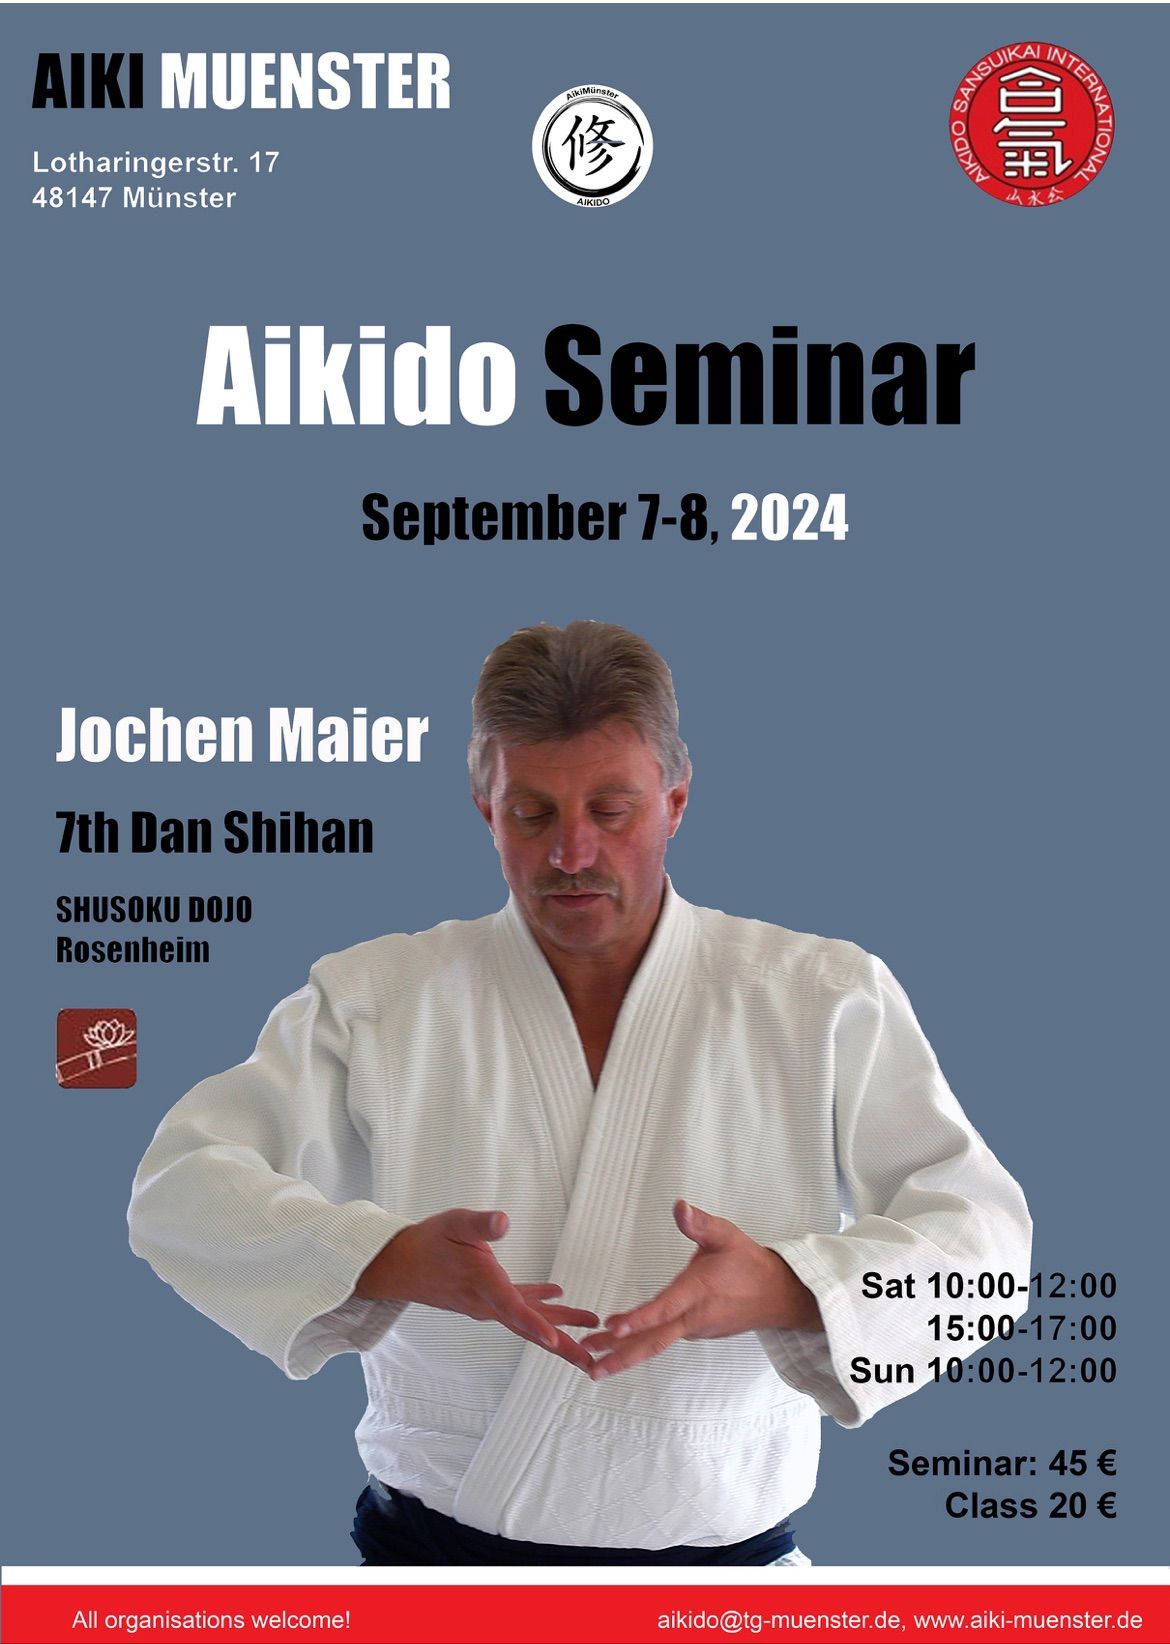 Aikido Seminar with Jochen Maier, 7. Dan Shihan